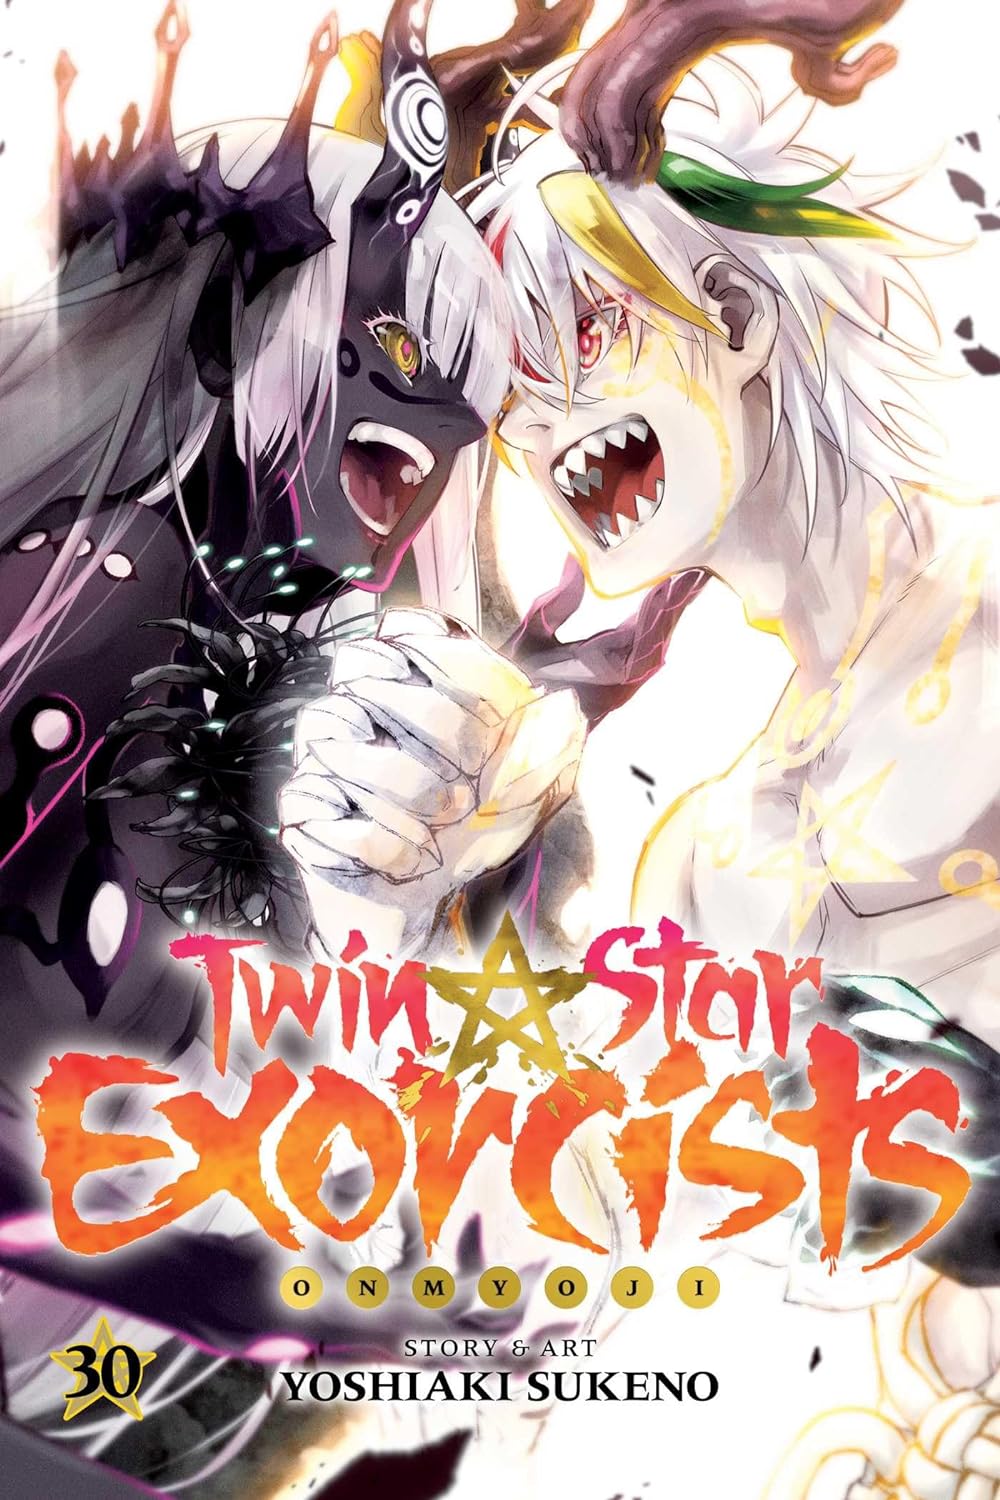 Twin Star Exorcists Vol. 30: Onmyoji